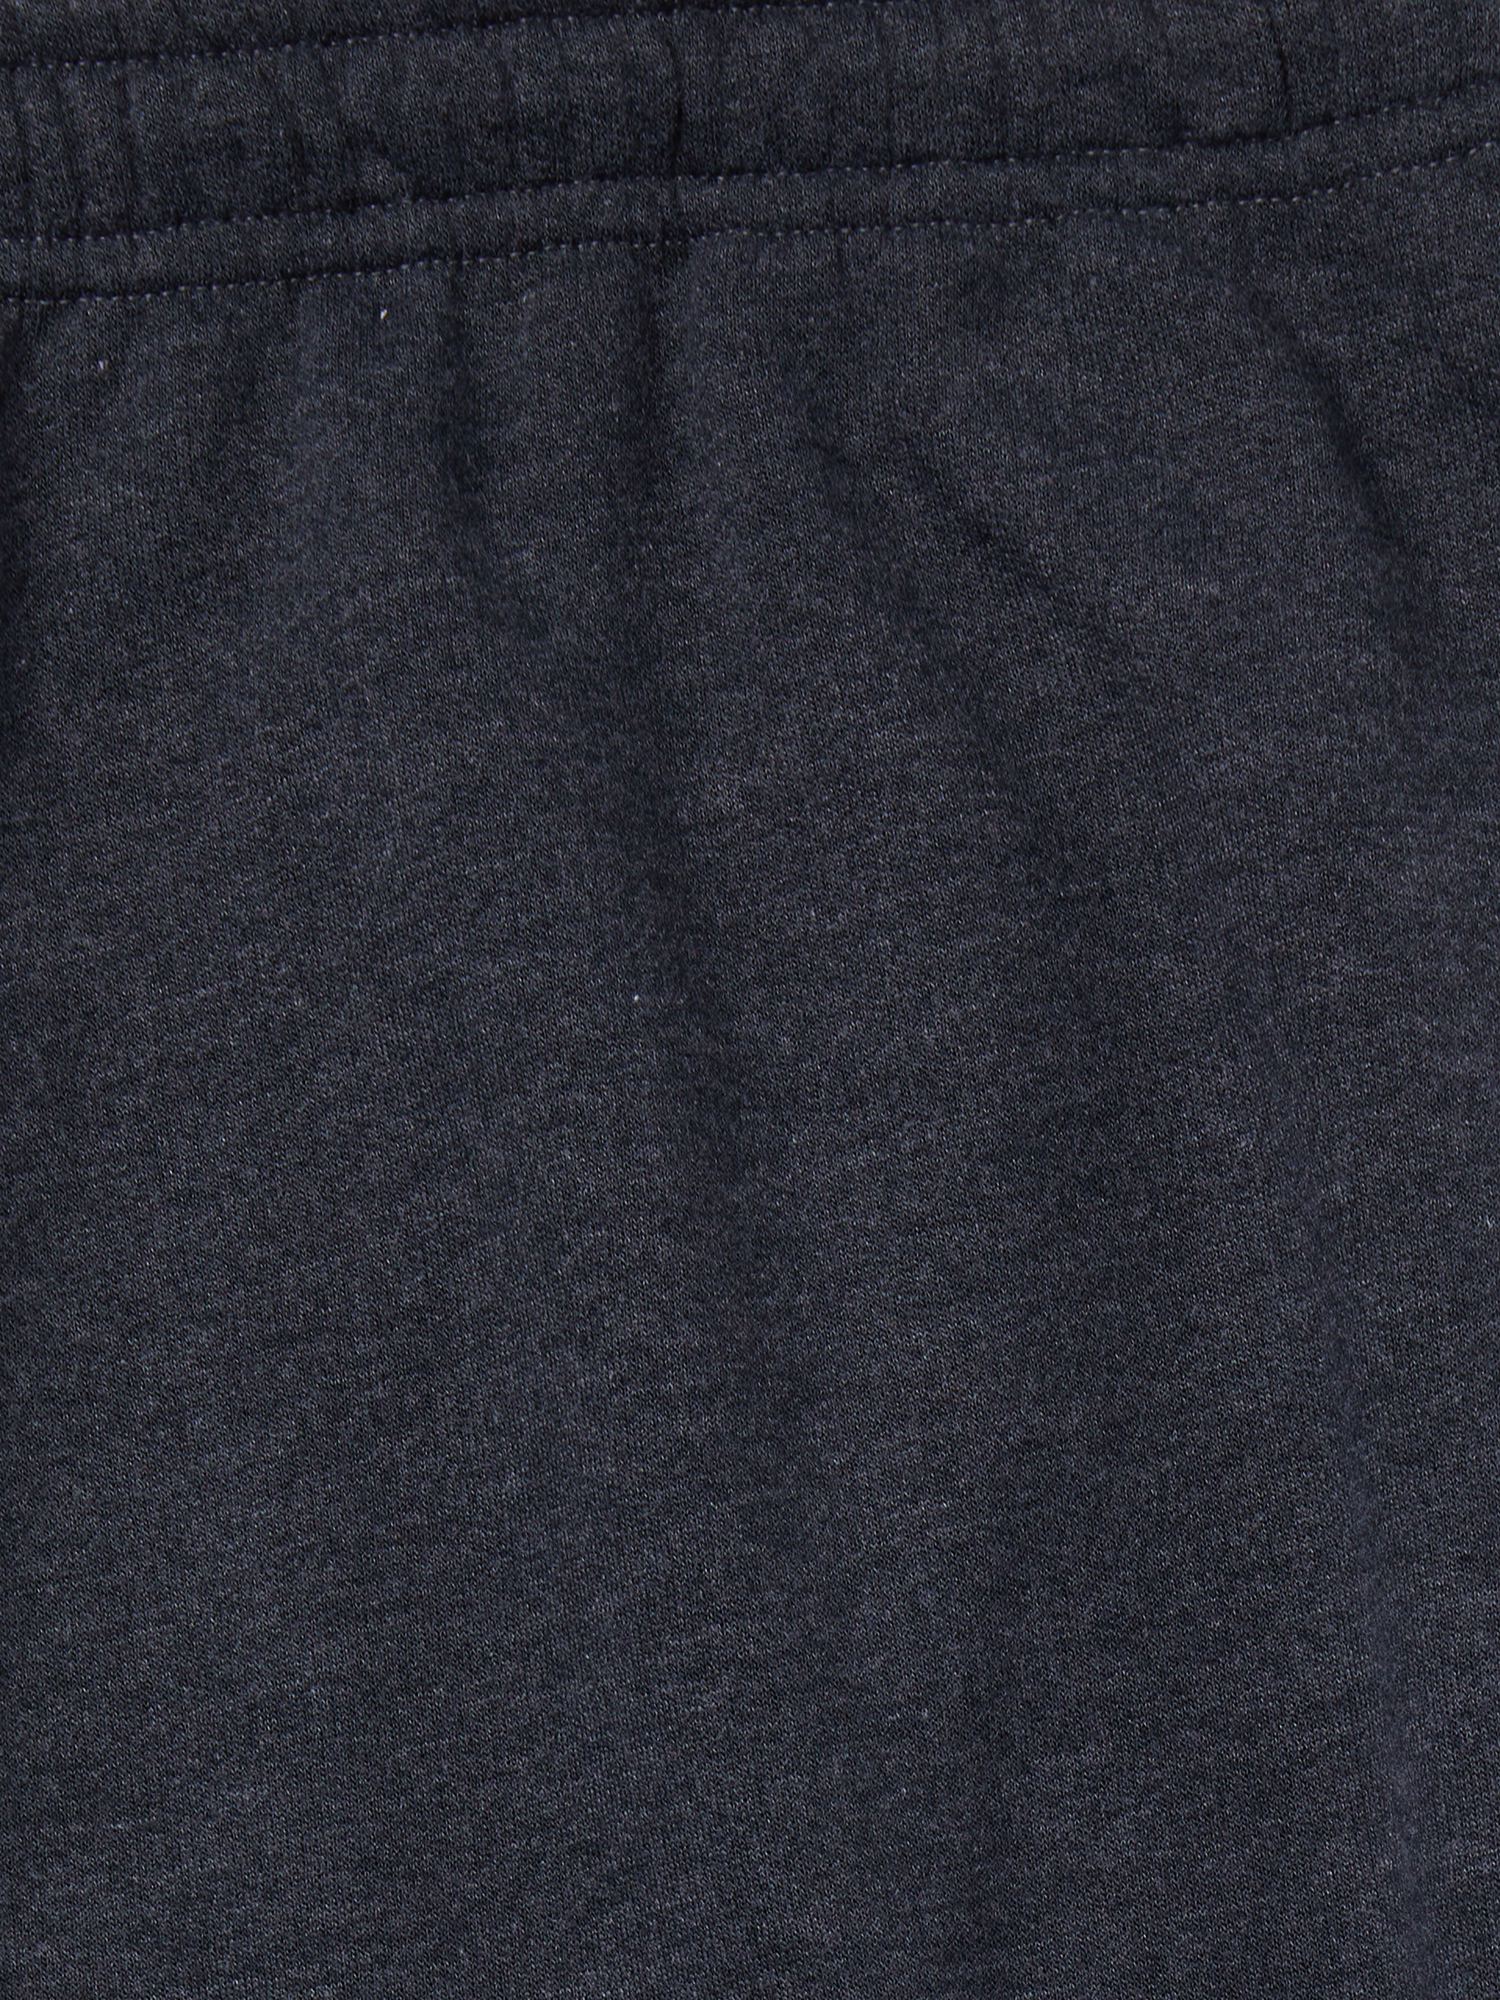 Athletic Works Men's Fleece Elastic Bottom Sweatpants - image 2 of 5